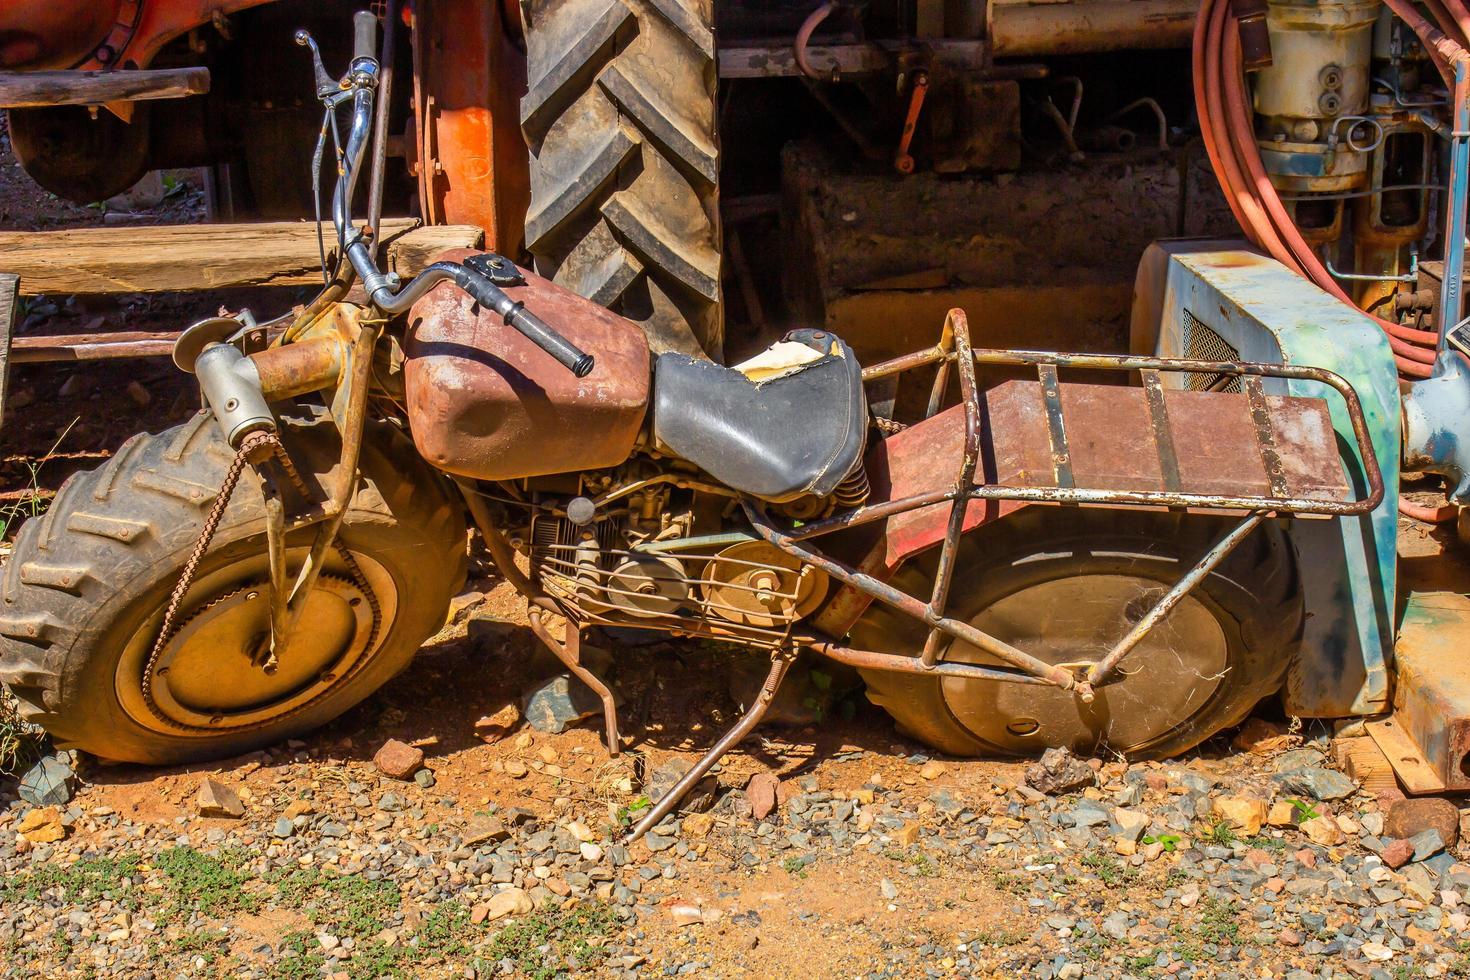 vieja motocicleta oxidada en depósito de chatarra foto